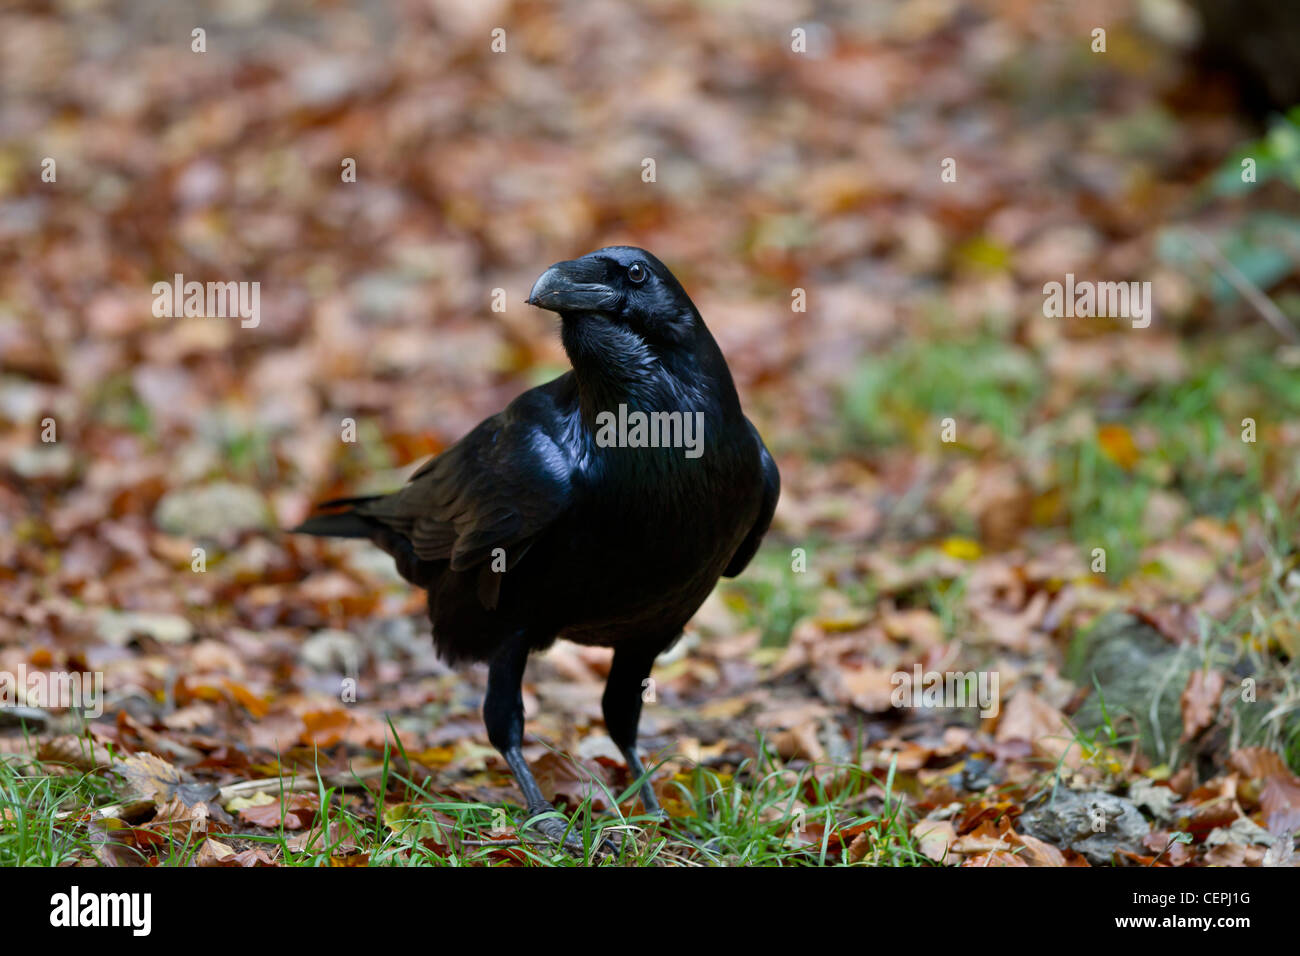 Kolkrabe, Corvus corax,common raven Stock Photo